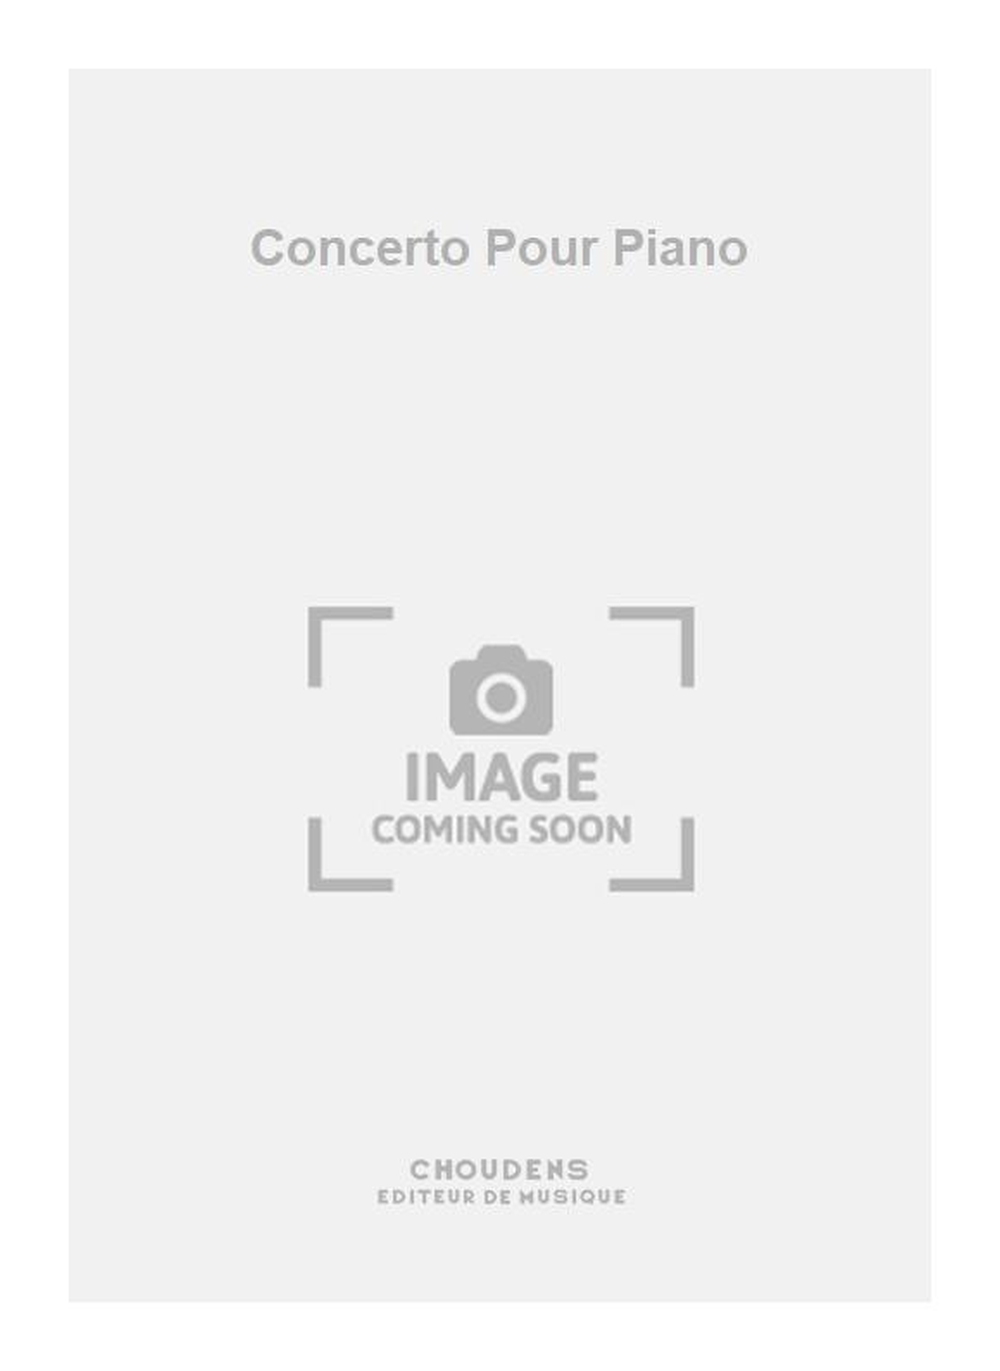 Marcel Landowski: Concerto Pour Piano